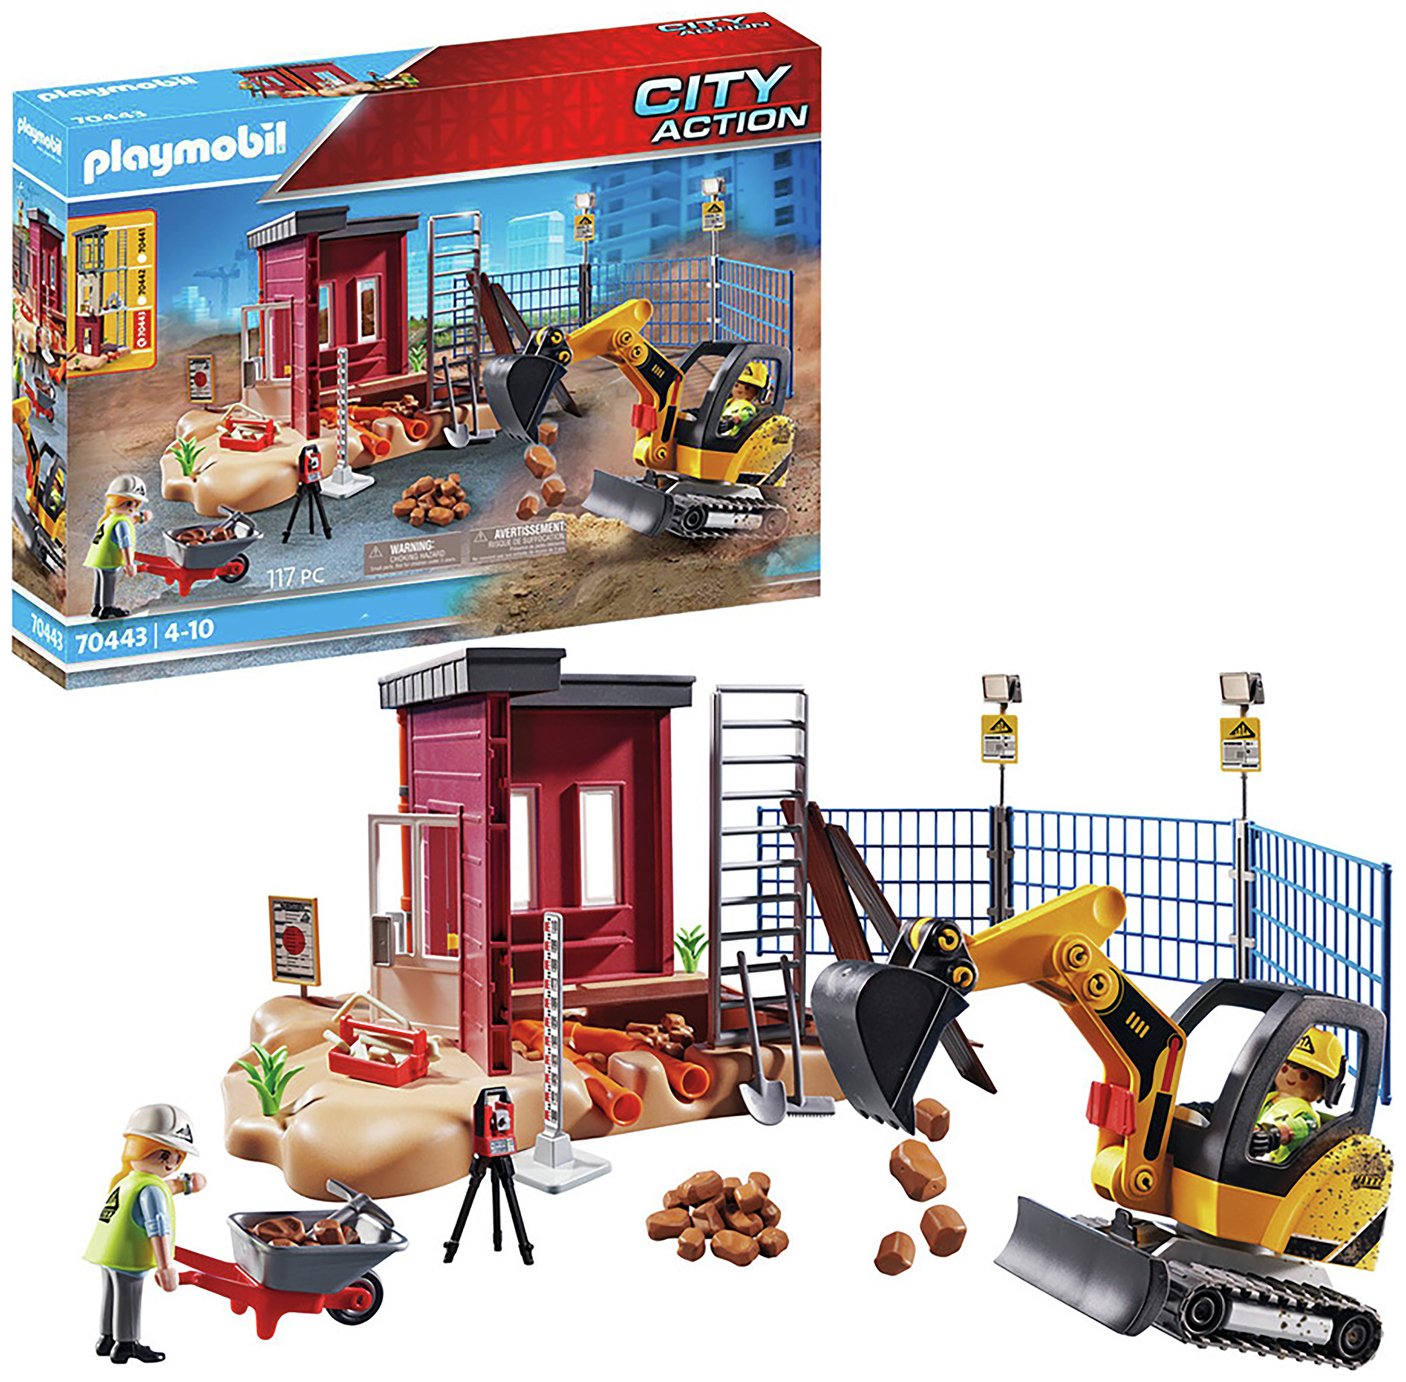 Playmobil 70443 City Action Construction Excavator